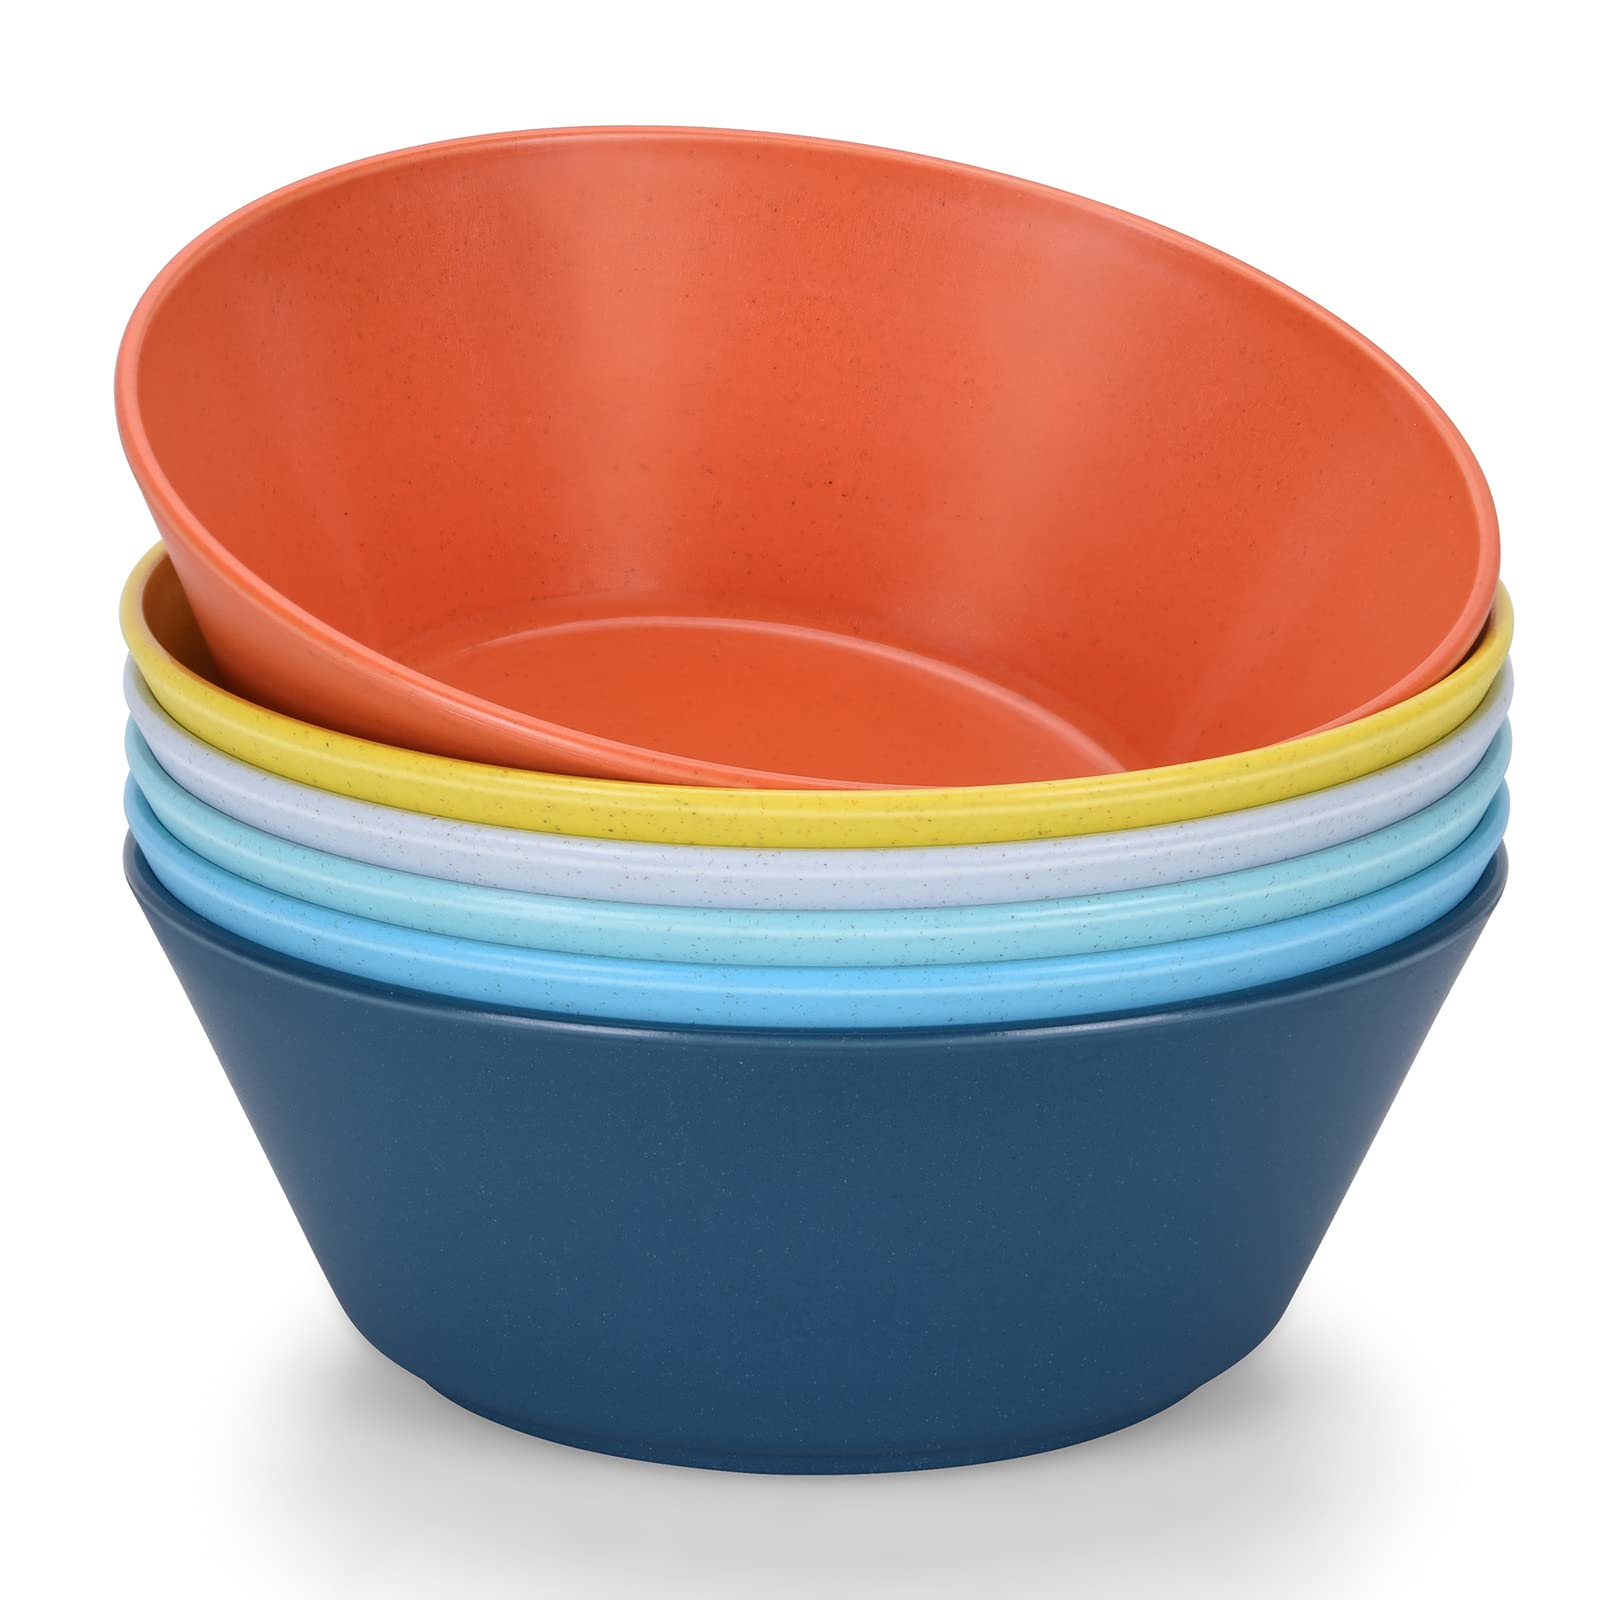 Unbreakable Large Cereal Bowls Set of 6, 32 Ounce BPA-Free Microwave and Dishwasher Safe Salad Bowls, Stackable Color Kitchen Bowls for Serving, Soup, Oatmeal, Pasta, Noodles - 6 Colors